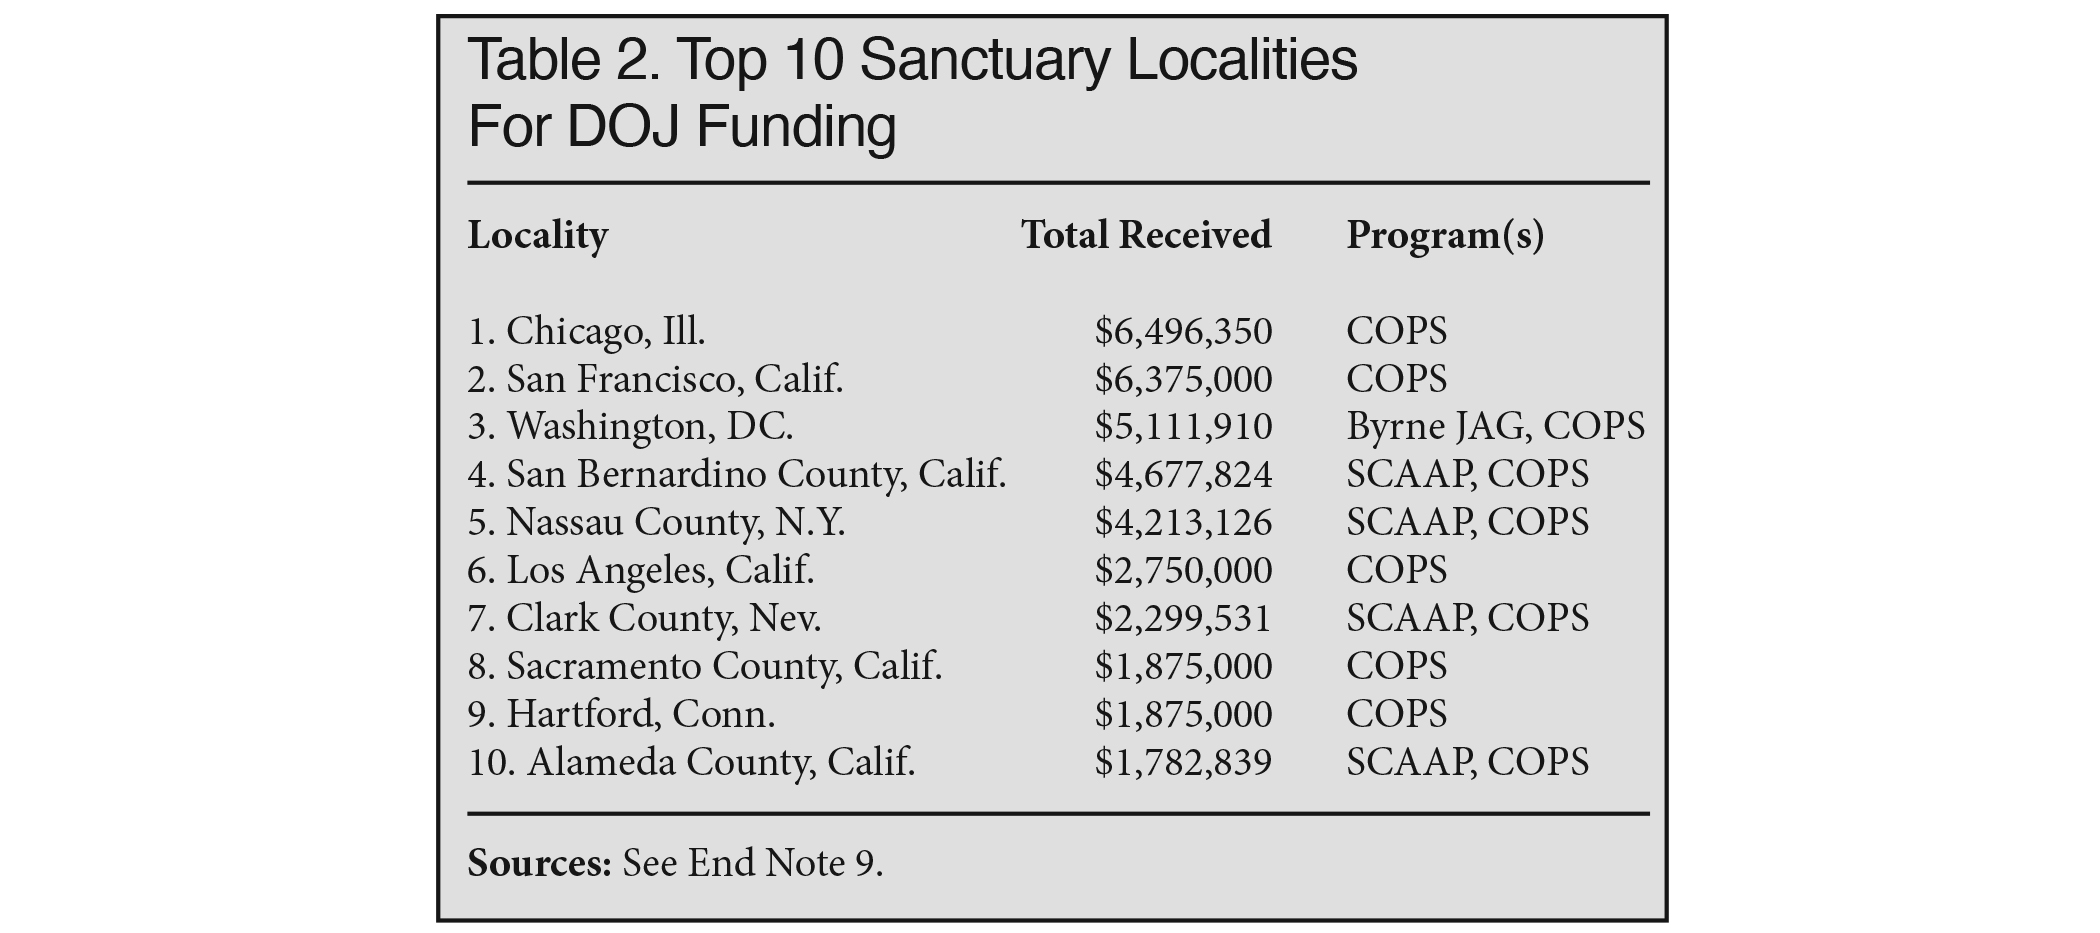 Table: Top 10 Sanctuary Localities for DOJ Funding